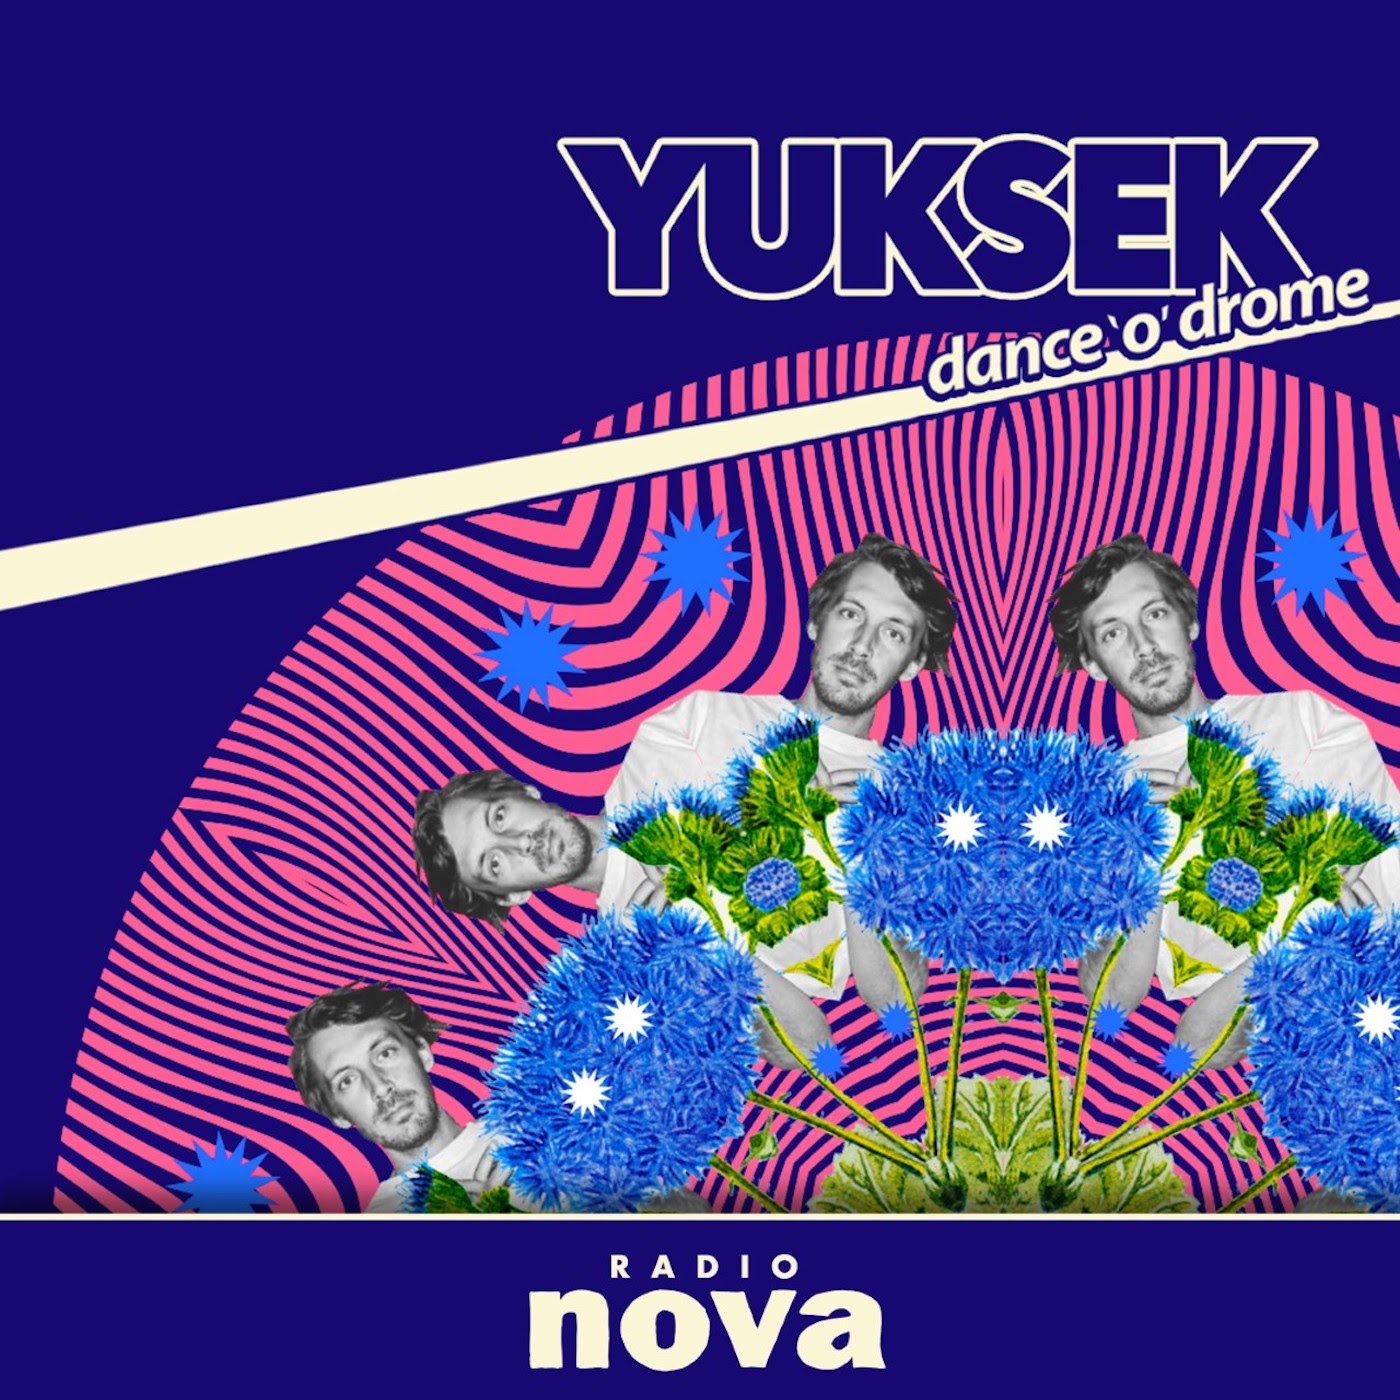 « Dance’o’drome » #8 : le mix de Yuksek, avec Perel, sur Radio Nova